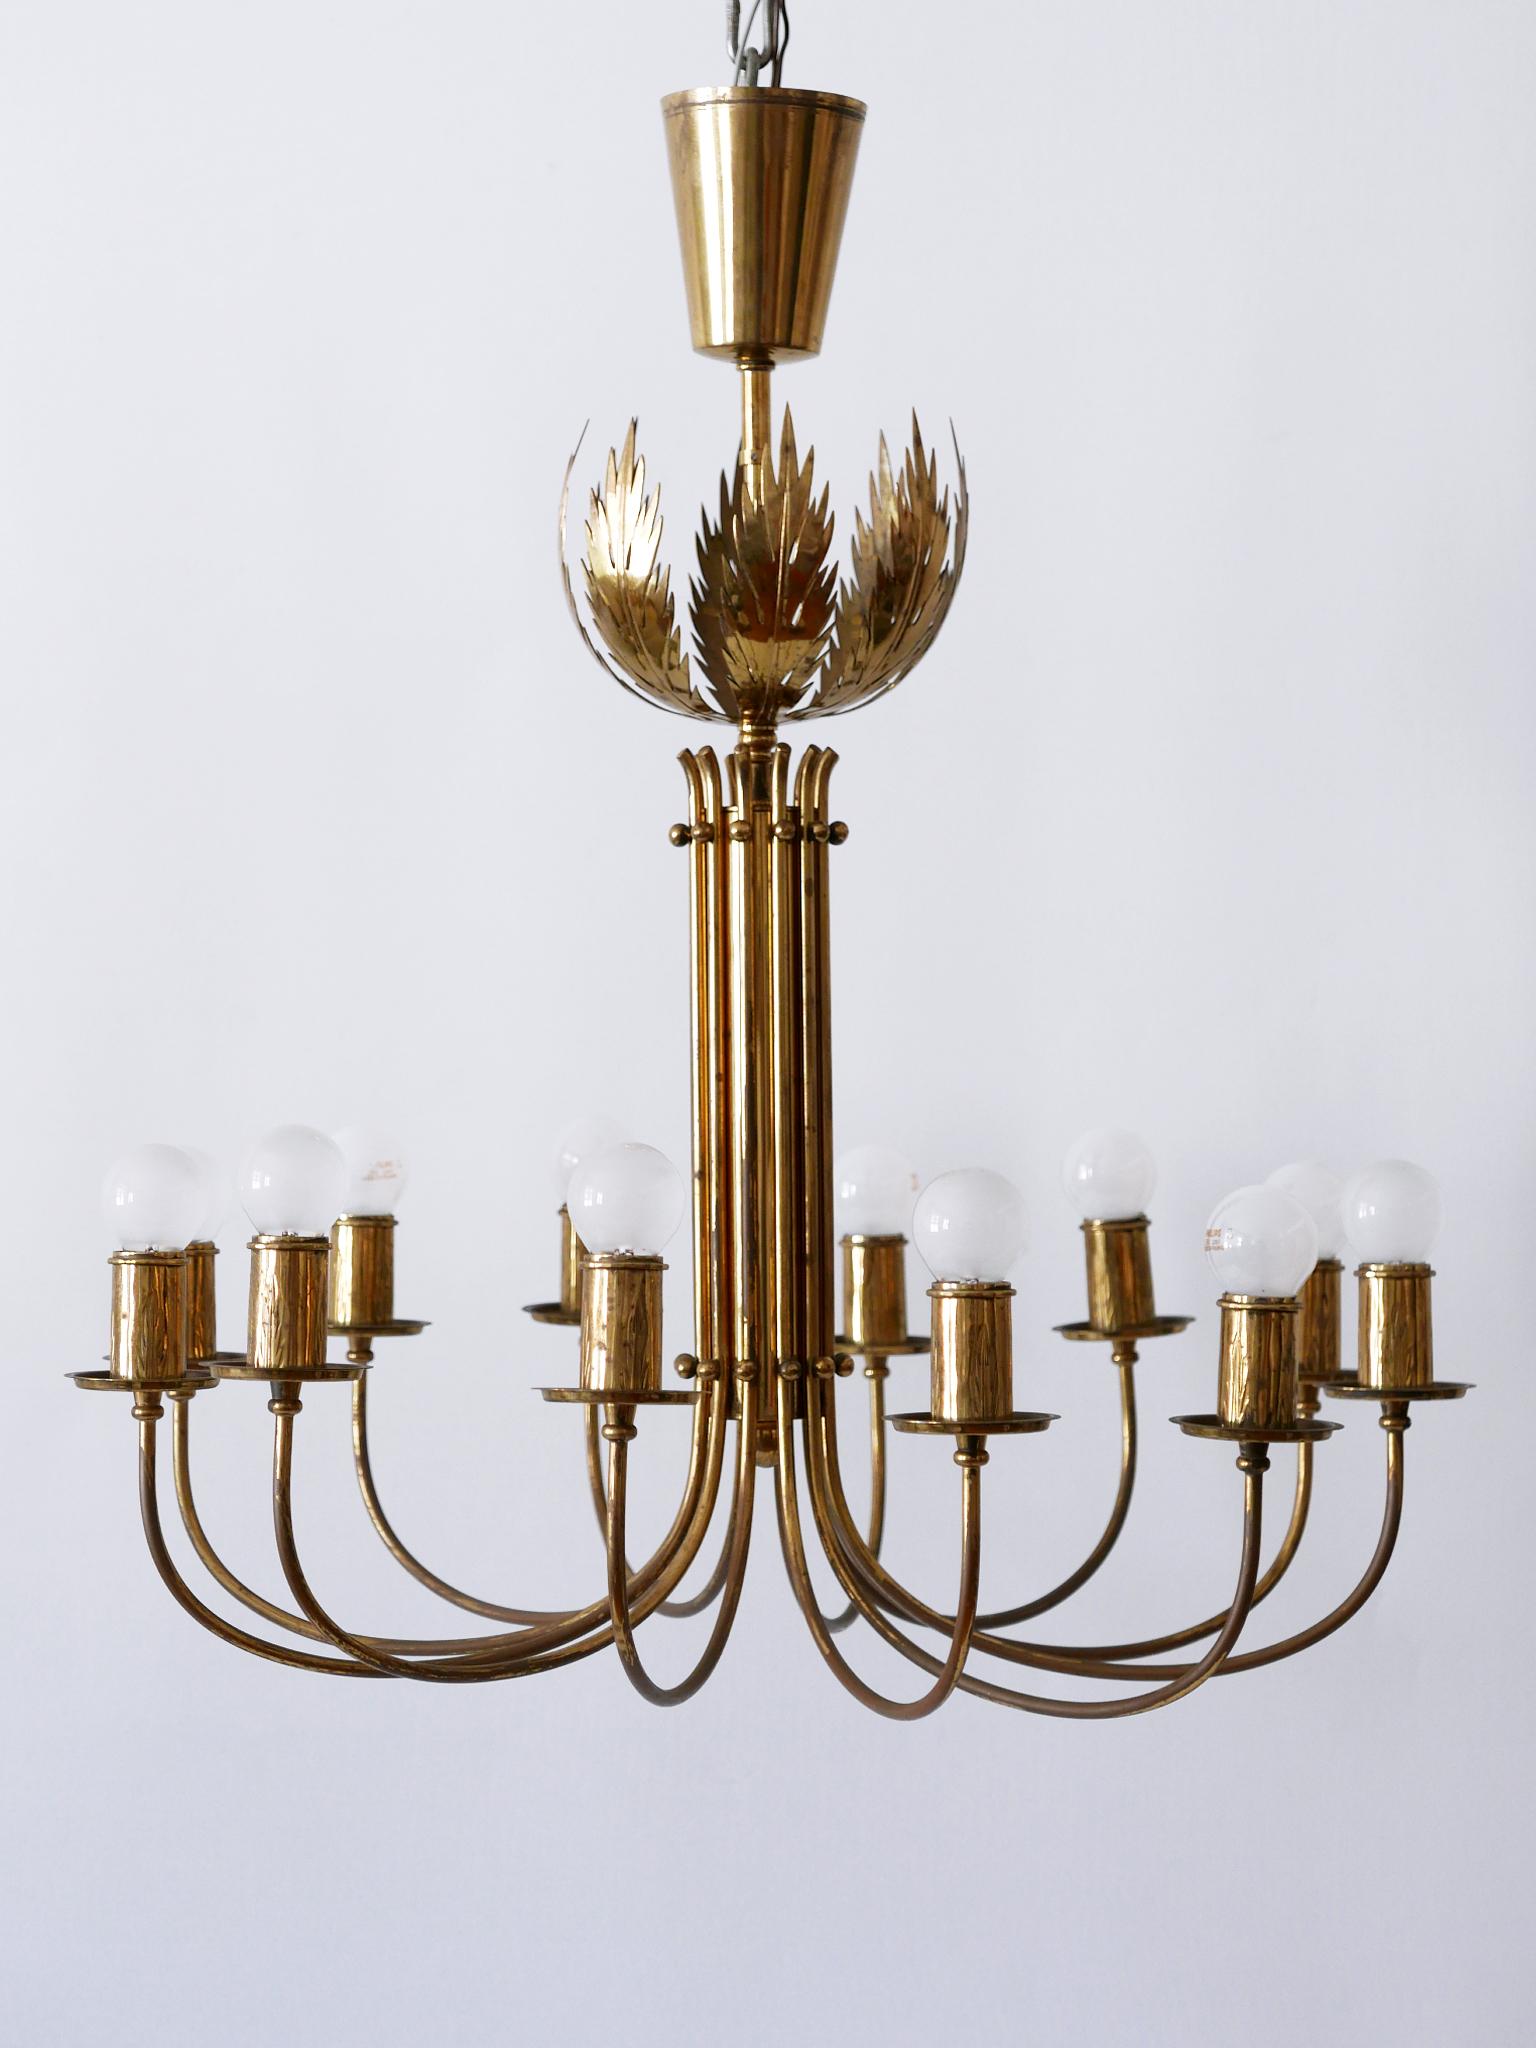 Rare 12-Armed Brass Chandeliers or Pendant Lamps by Vereinigte Werkstätten 1950s In Good Condition For Sale In Munich, DE